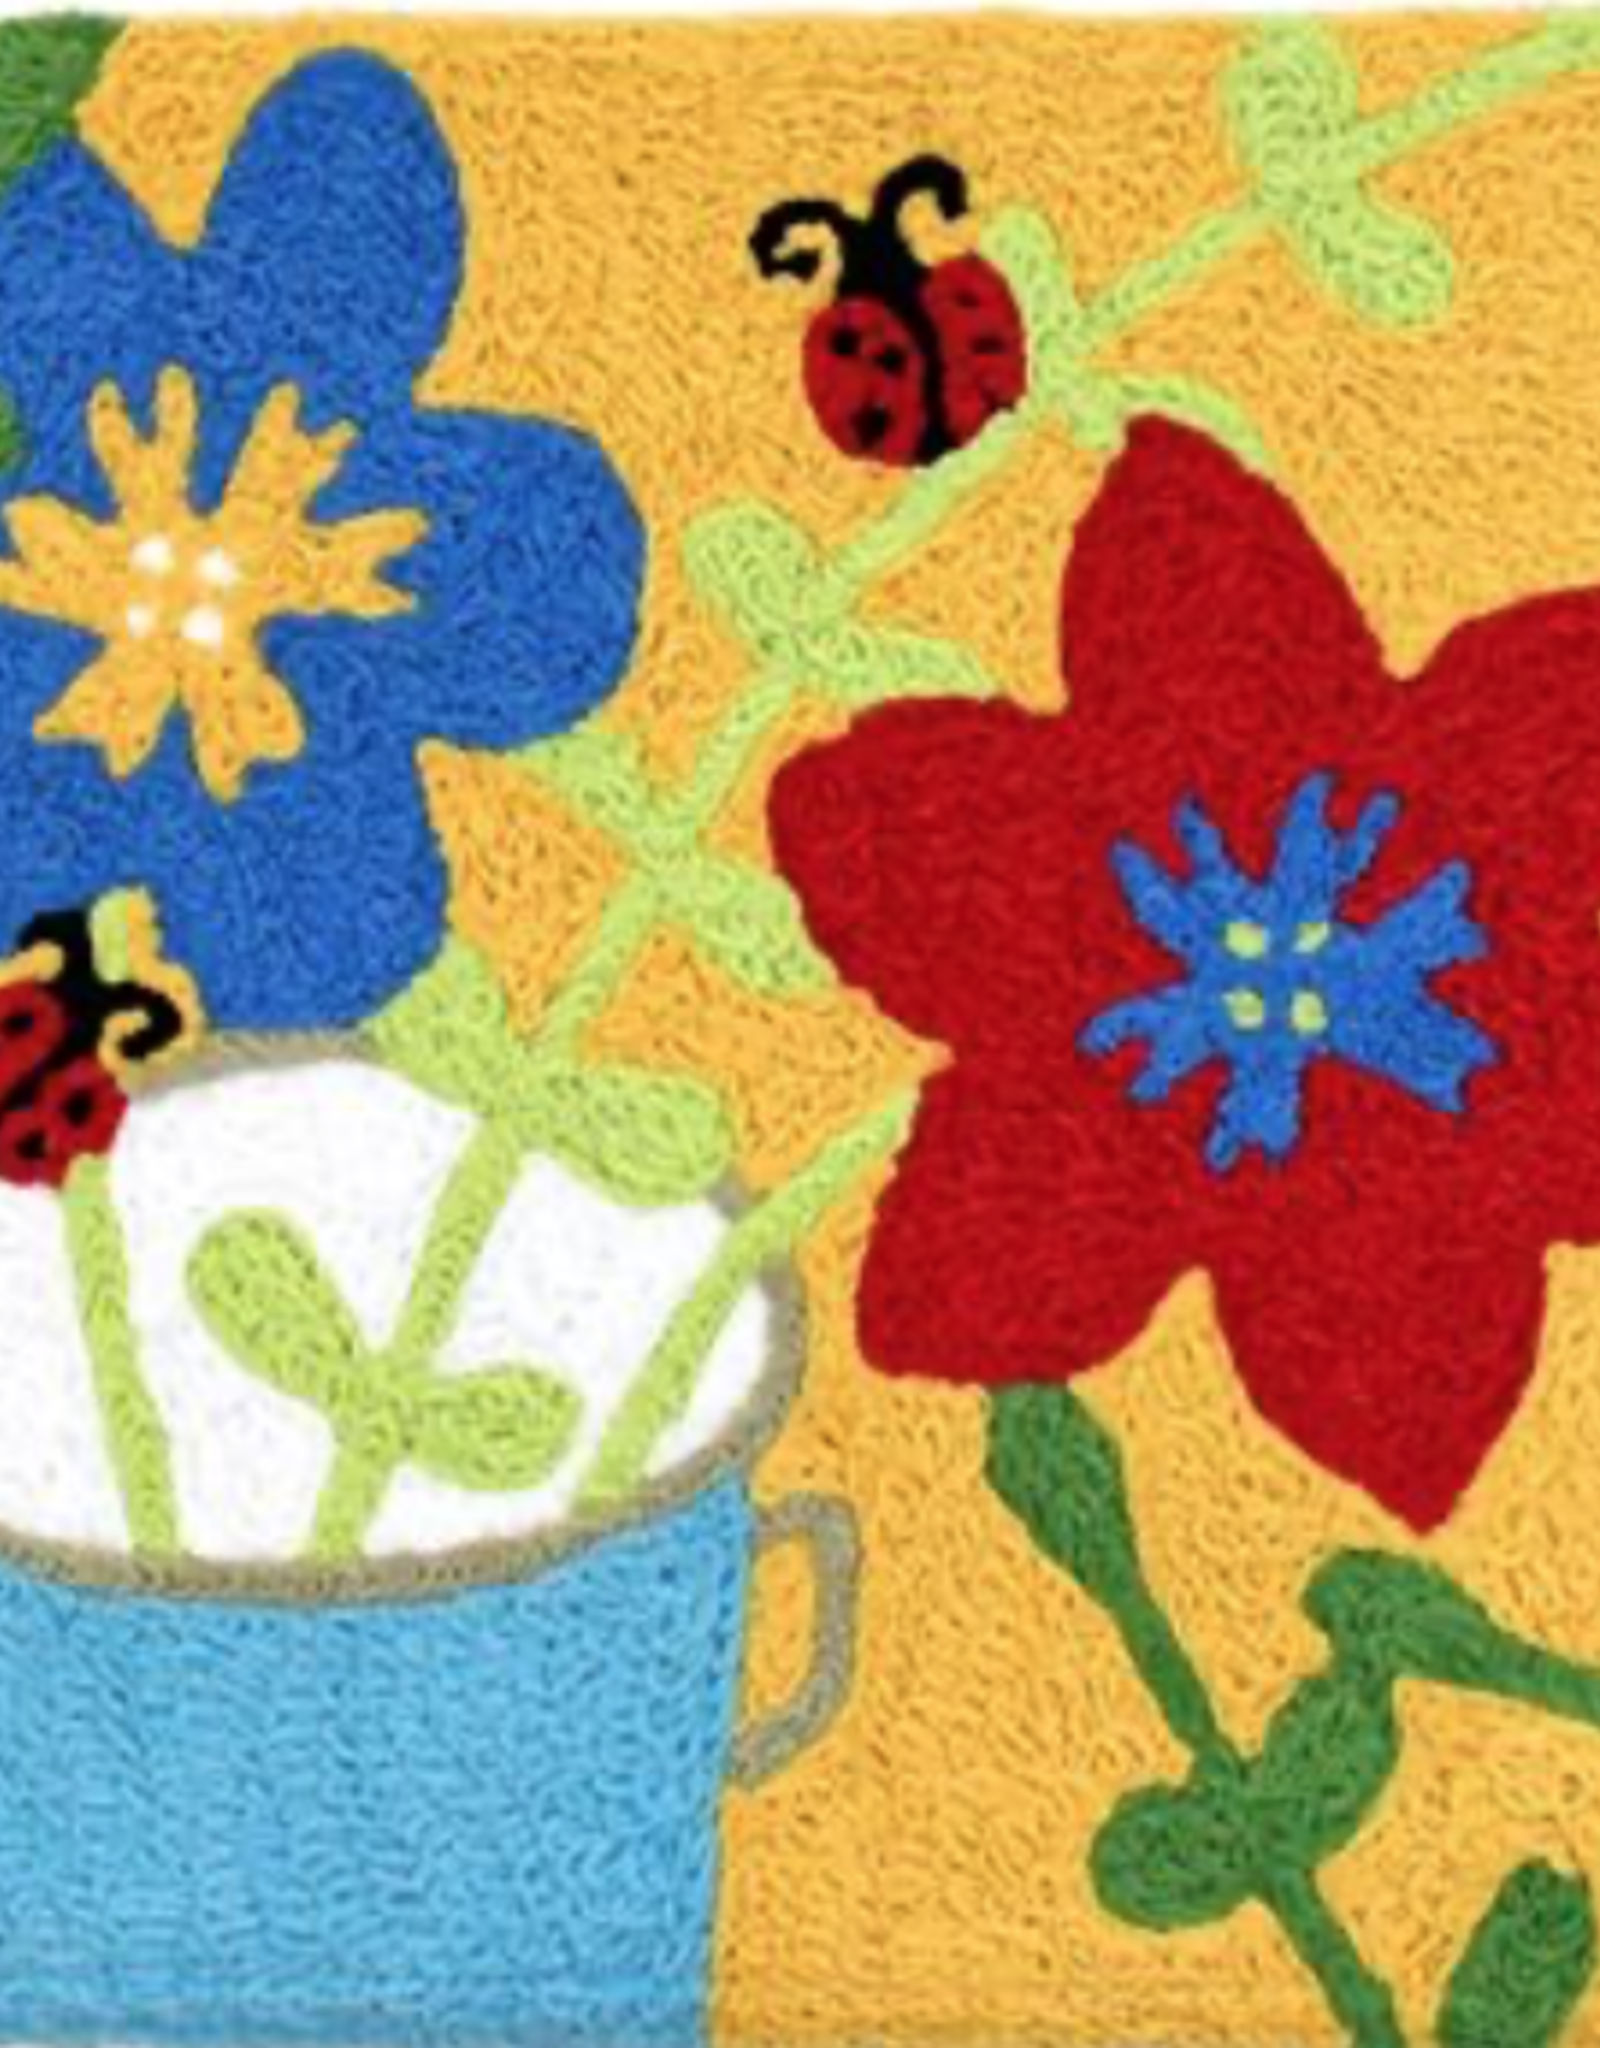 Home Goods Jellybean - Flower Pot & LadyBugs Rug